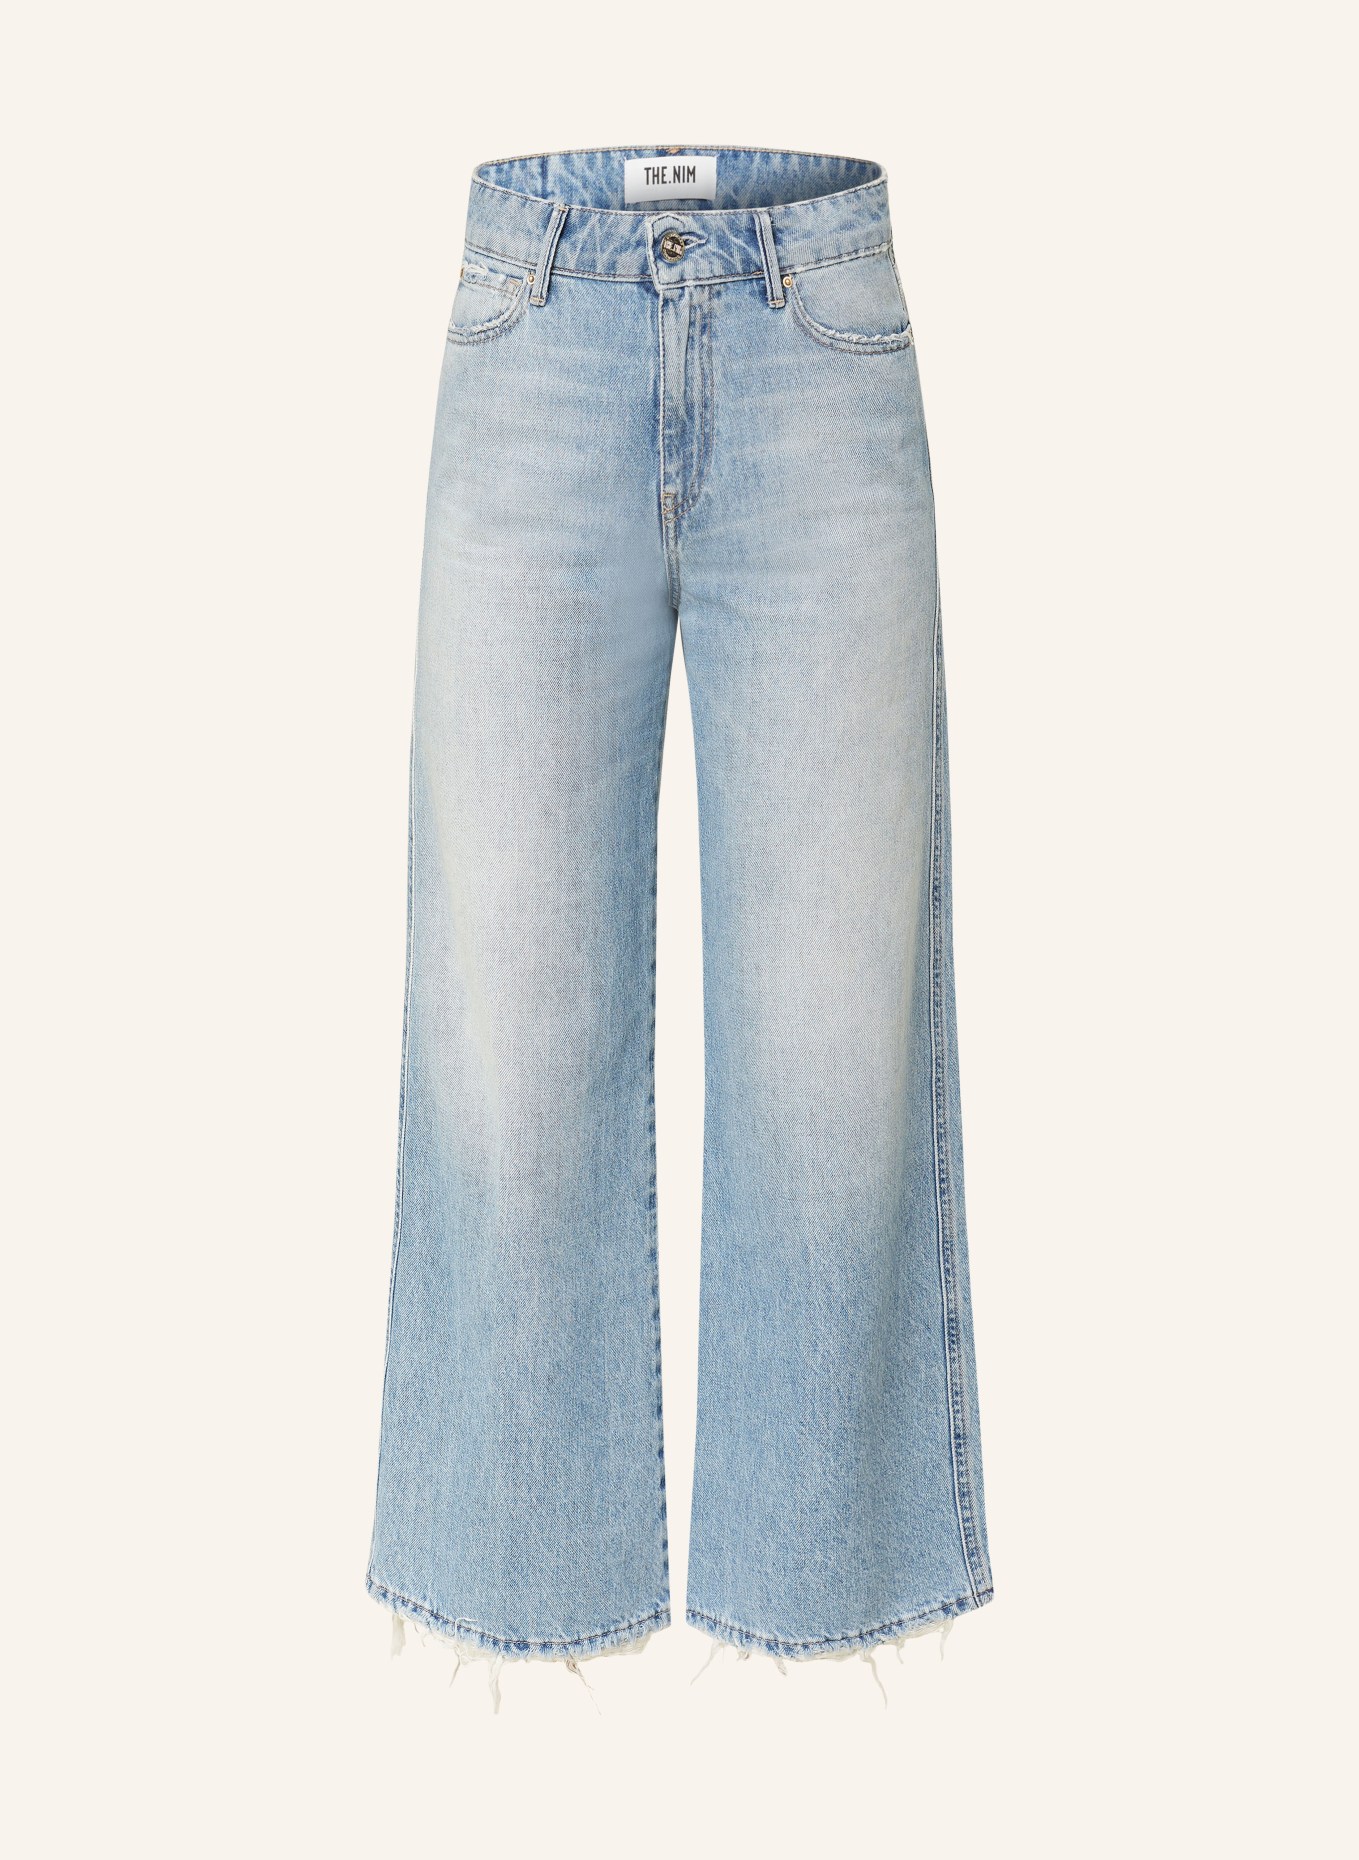 THE.NIM STANDARD Jeans-Culotte DEBBIE, Farbe: W721-LGW LIGHT BLUE (Bild 1)